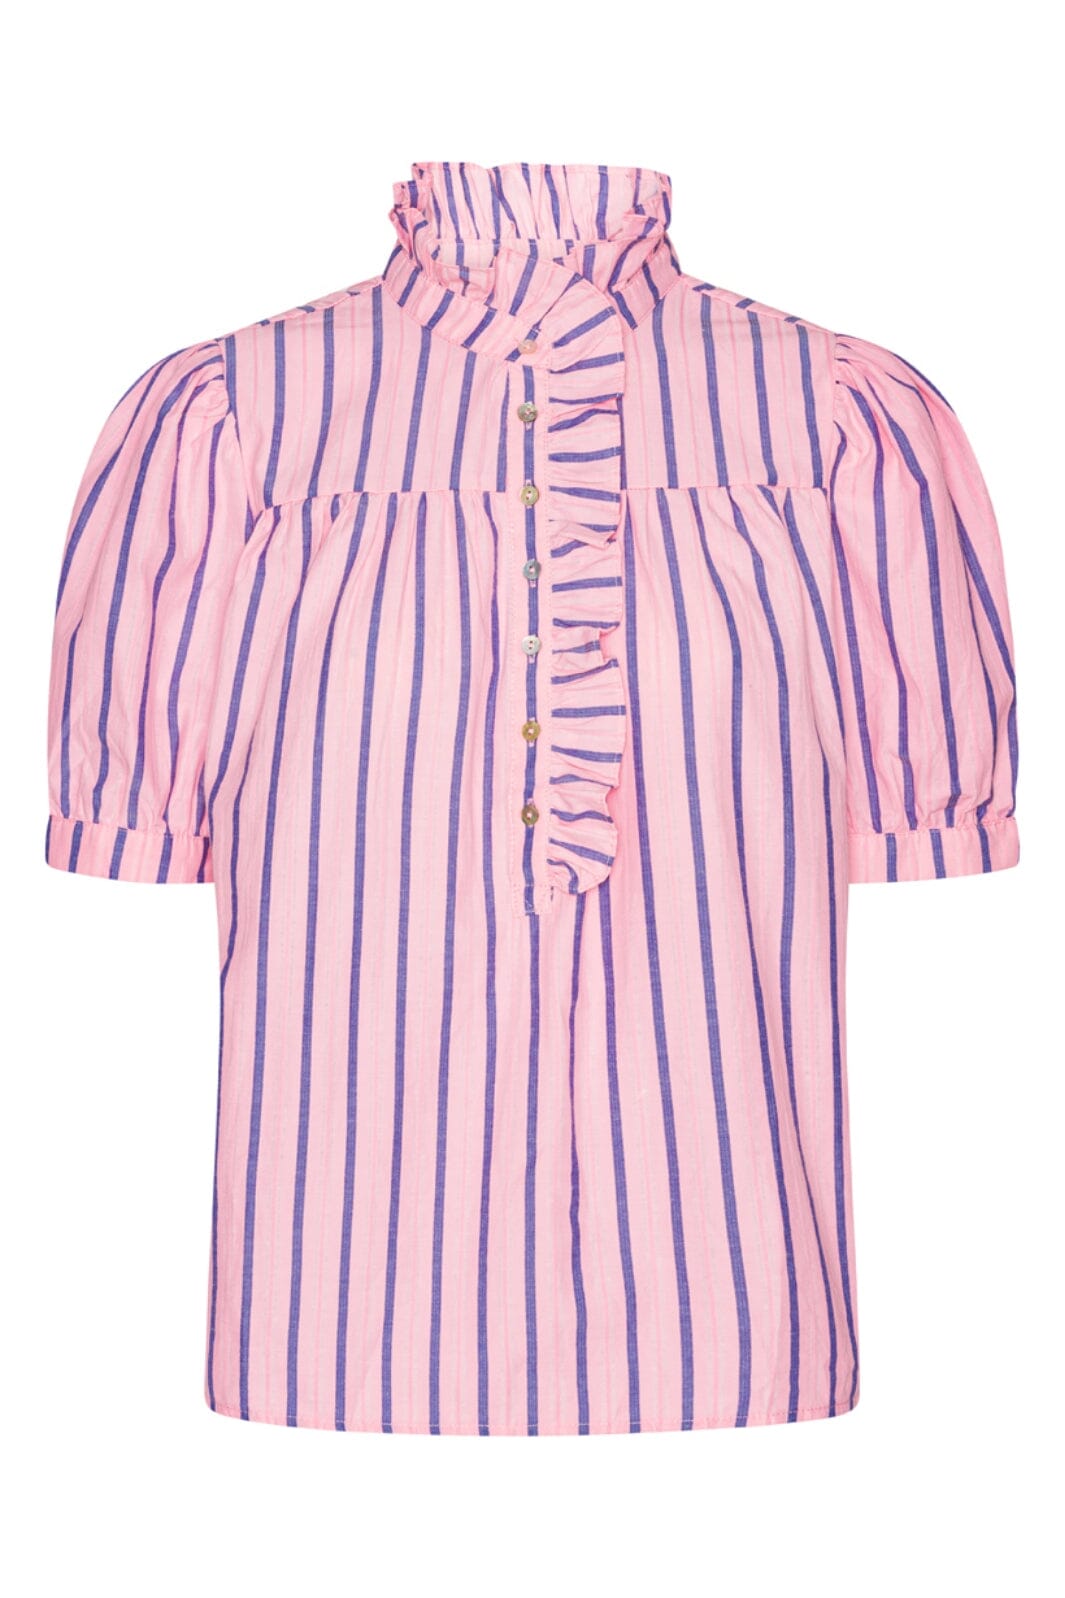 Continue - Arianna Ss Stripe - Pink Stripe Bluser 